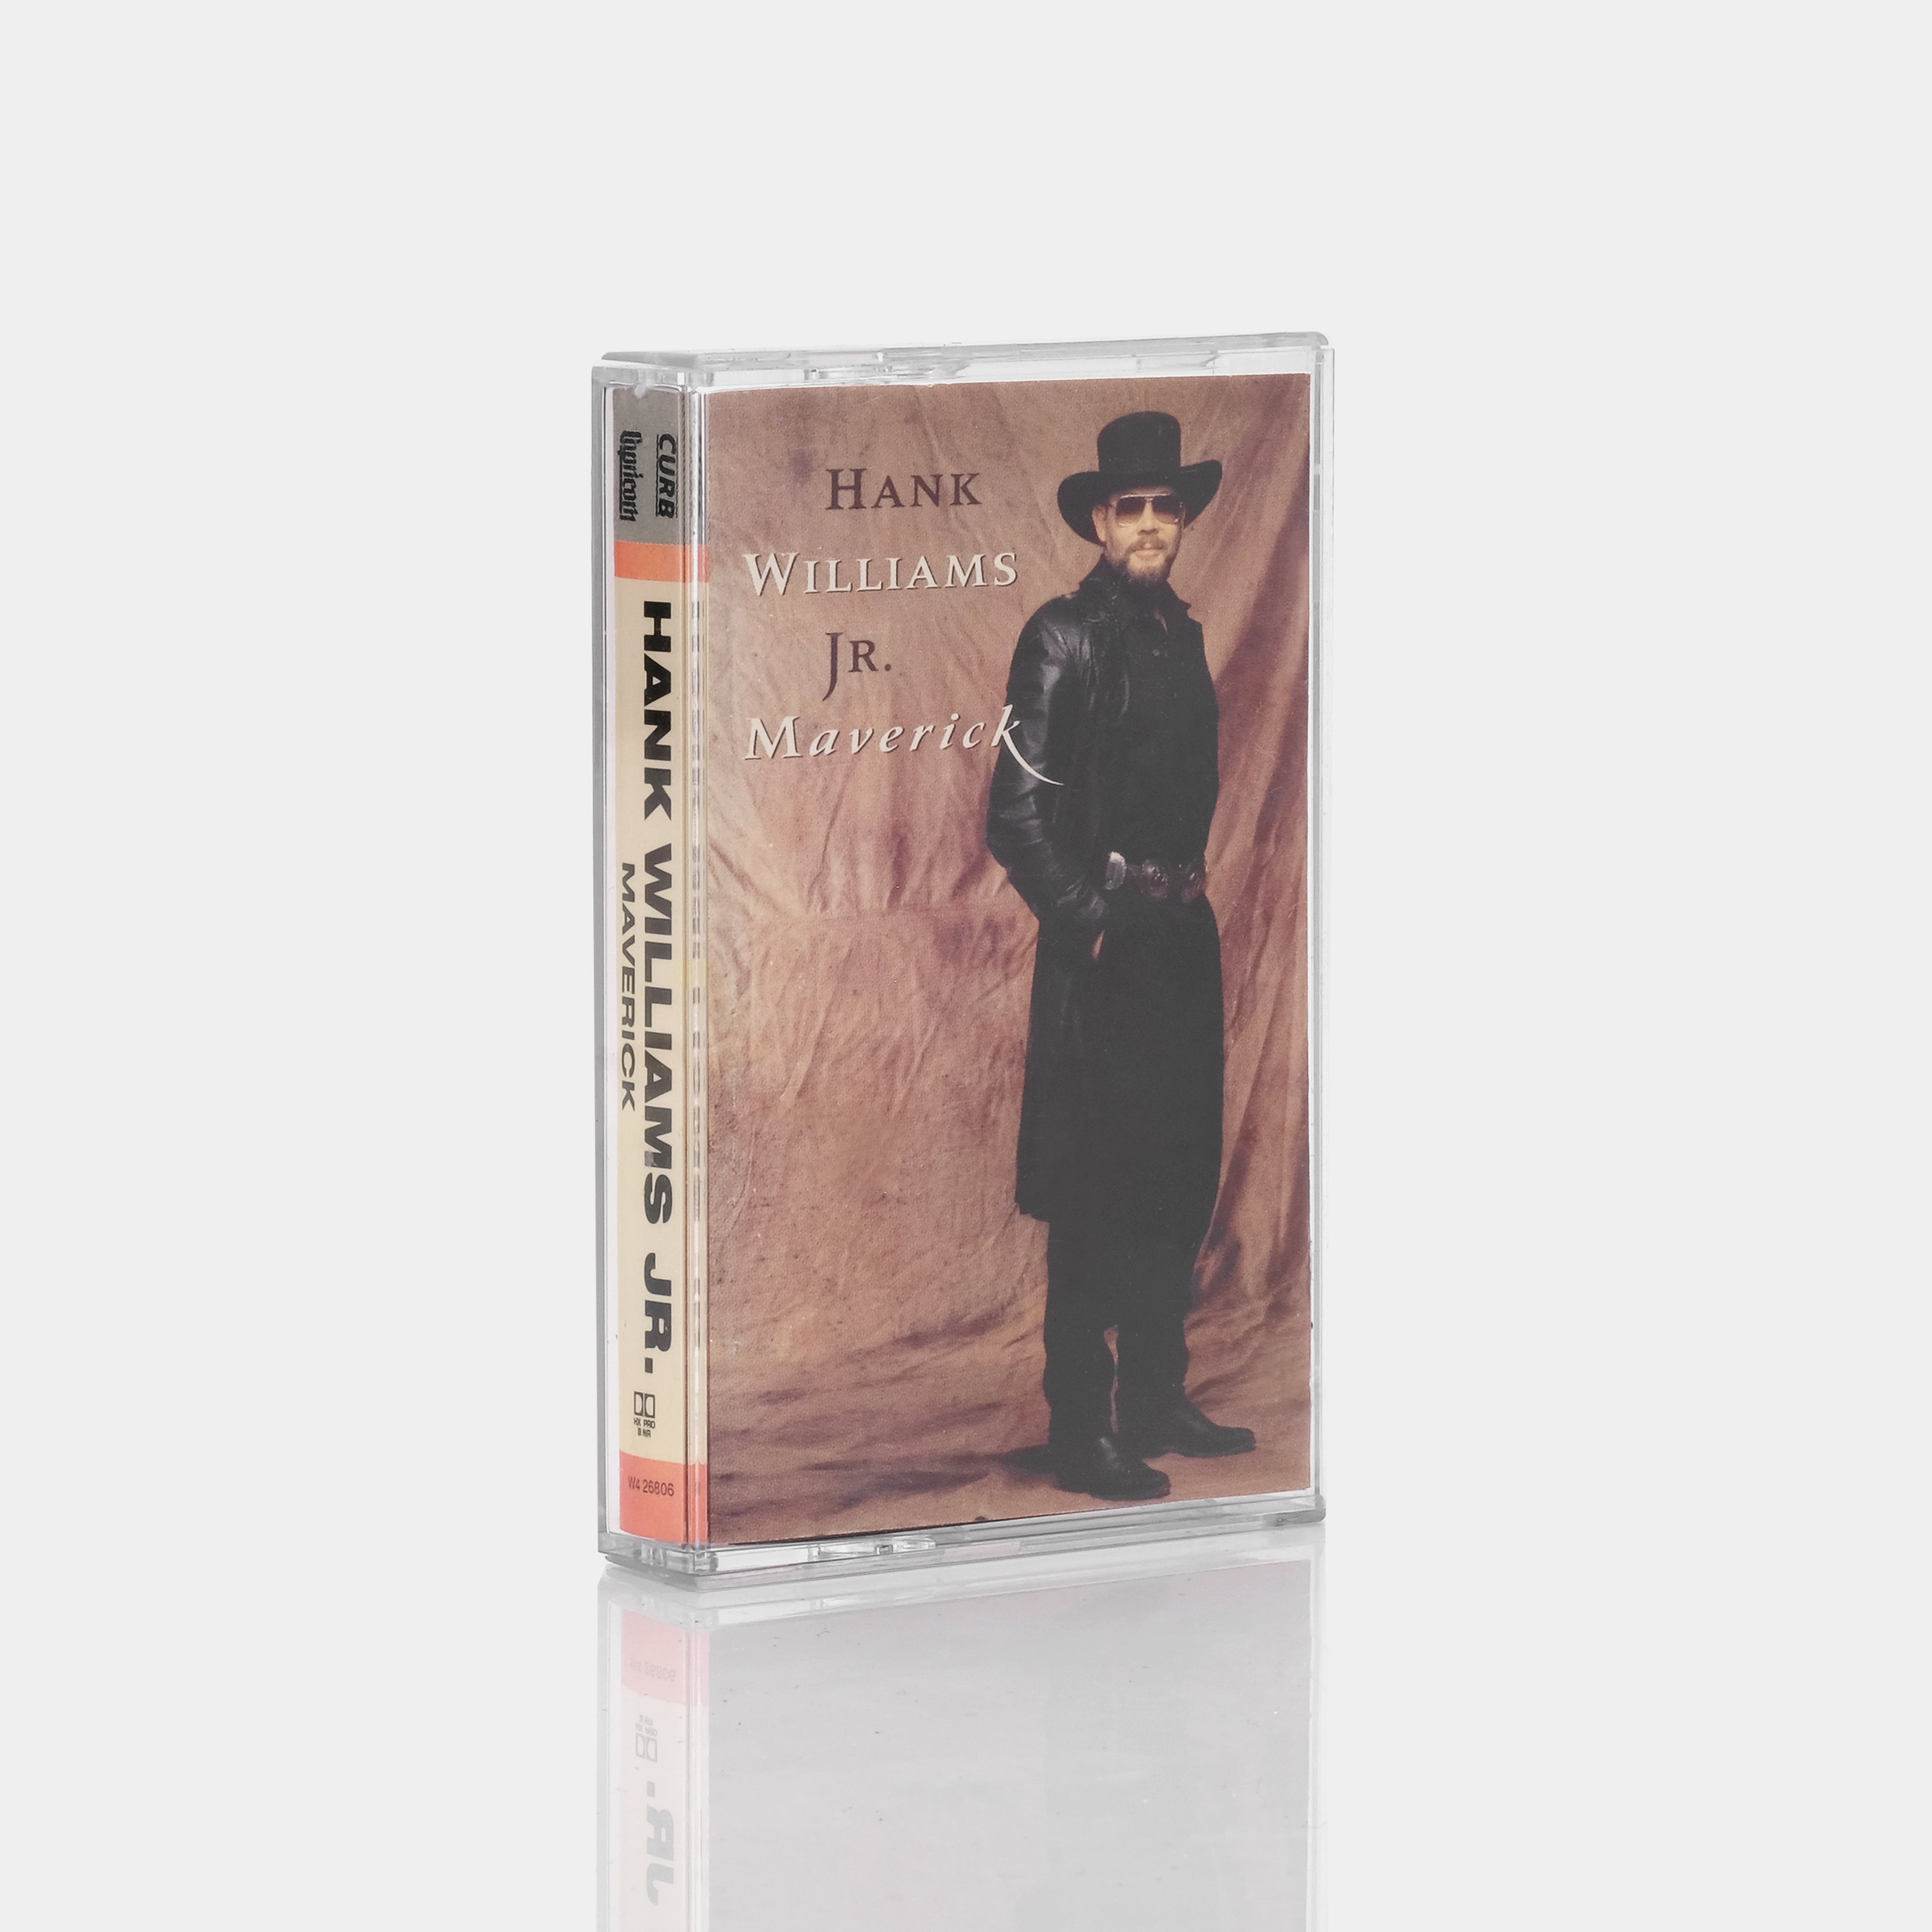 Hank Williams Jr. - Maverick Cassette Tape